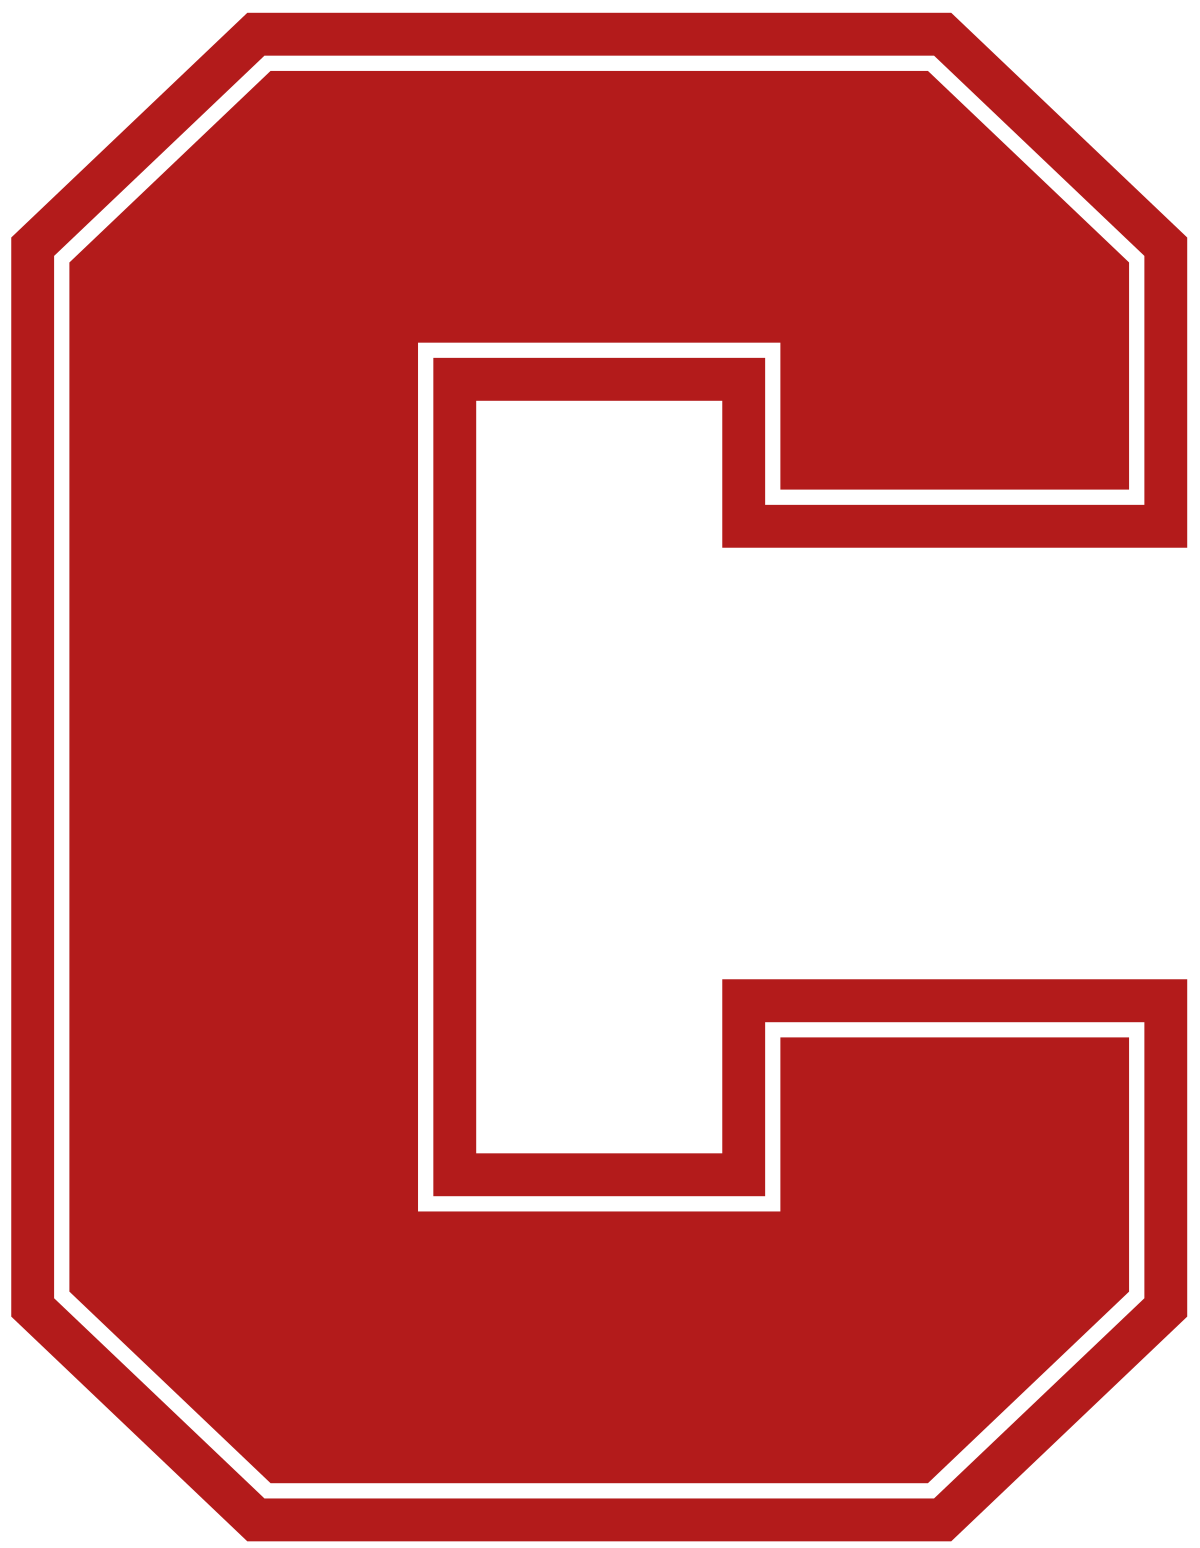 Cornell_%22C%22_logo.svg.png